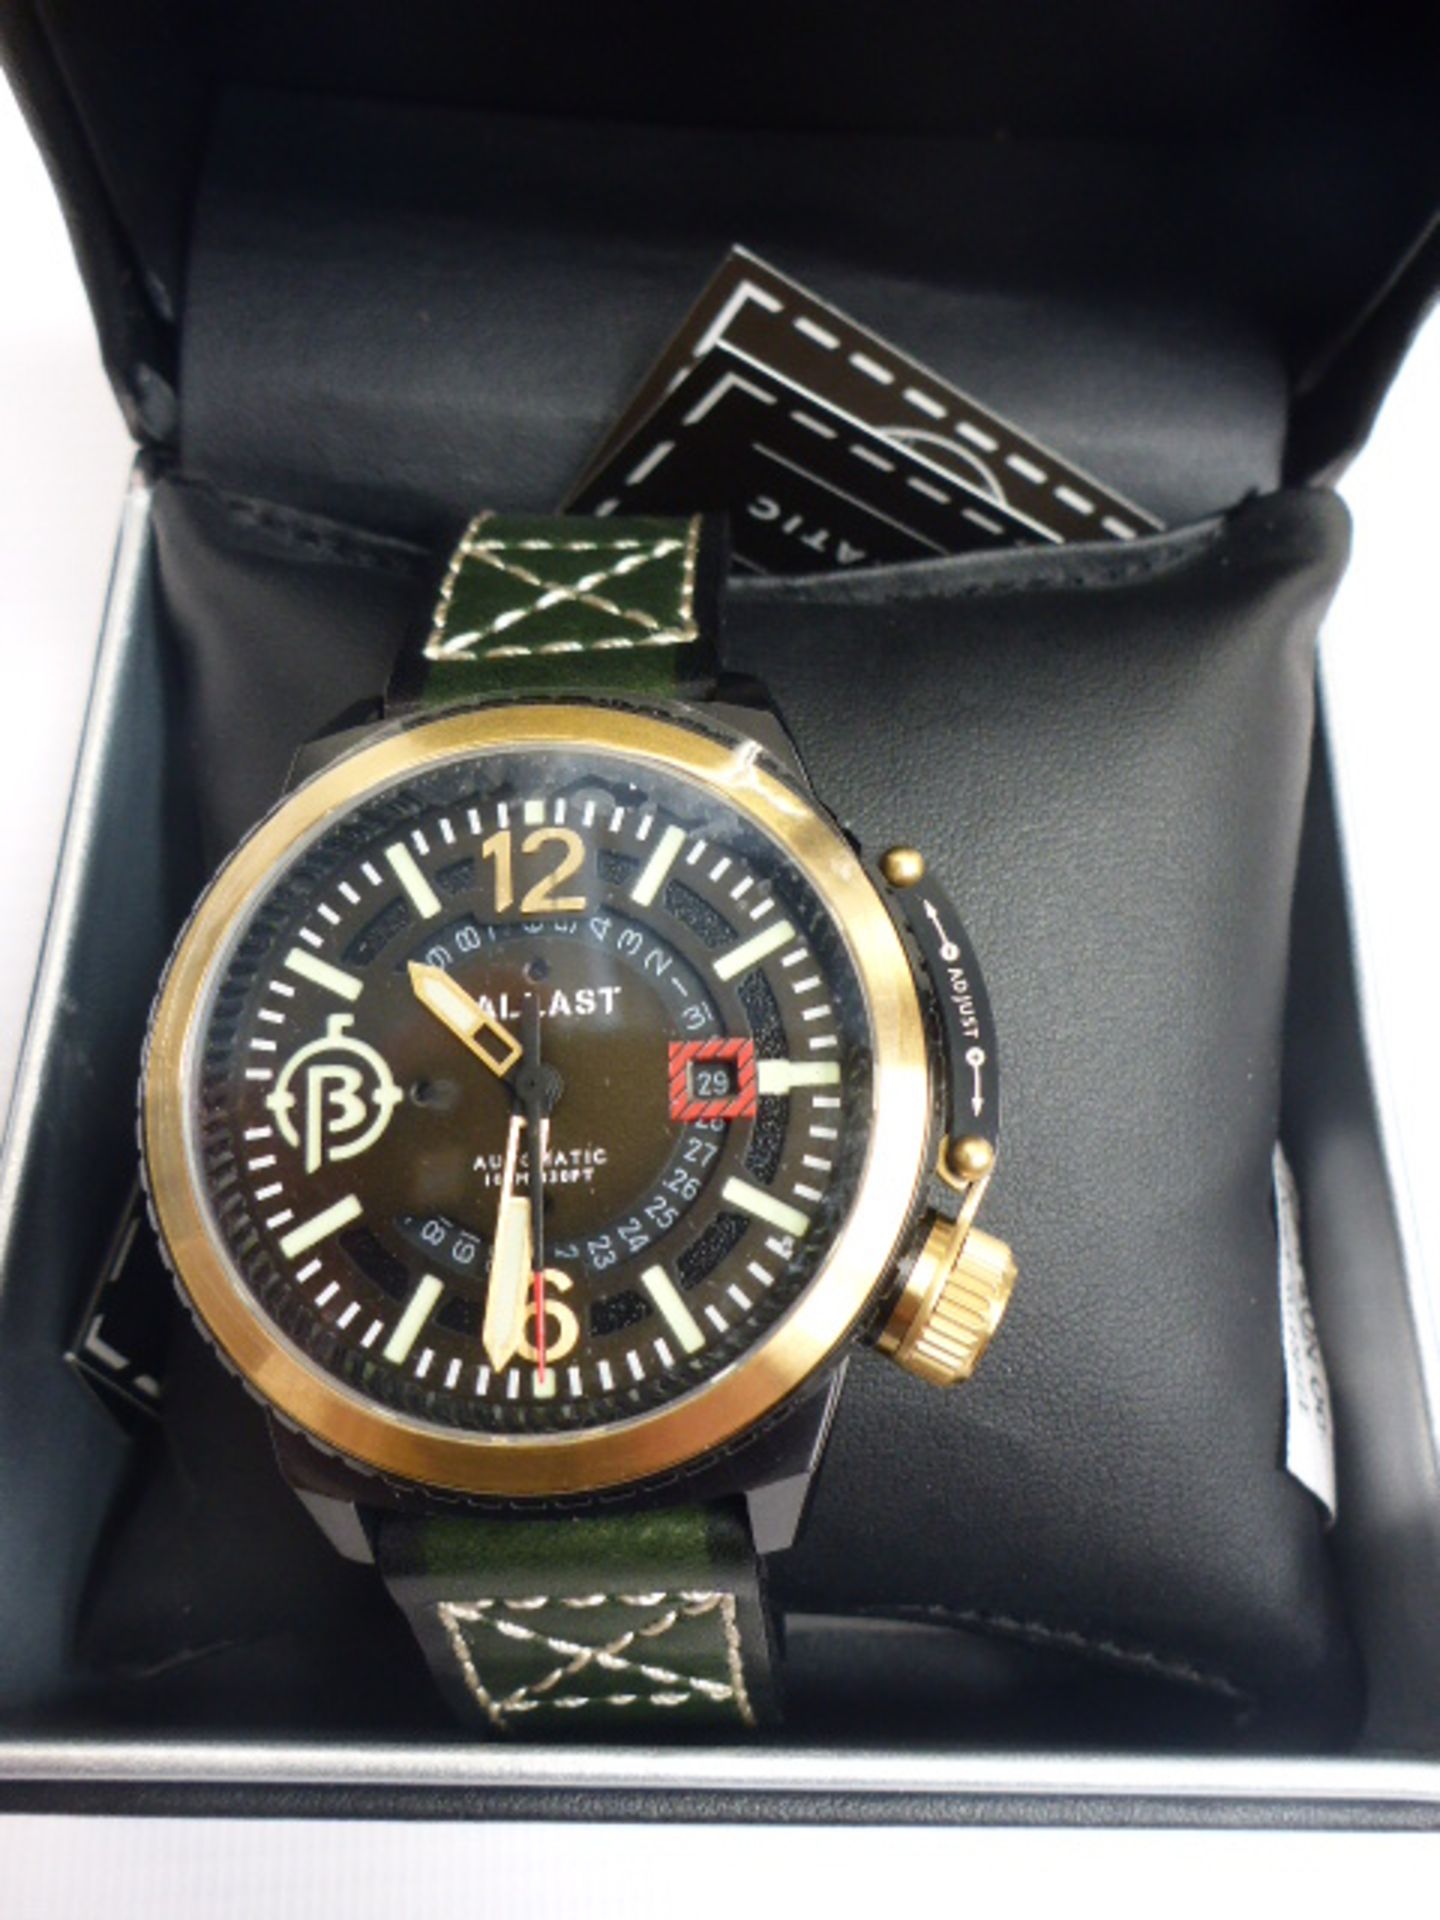 Ballast wristwatch in box